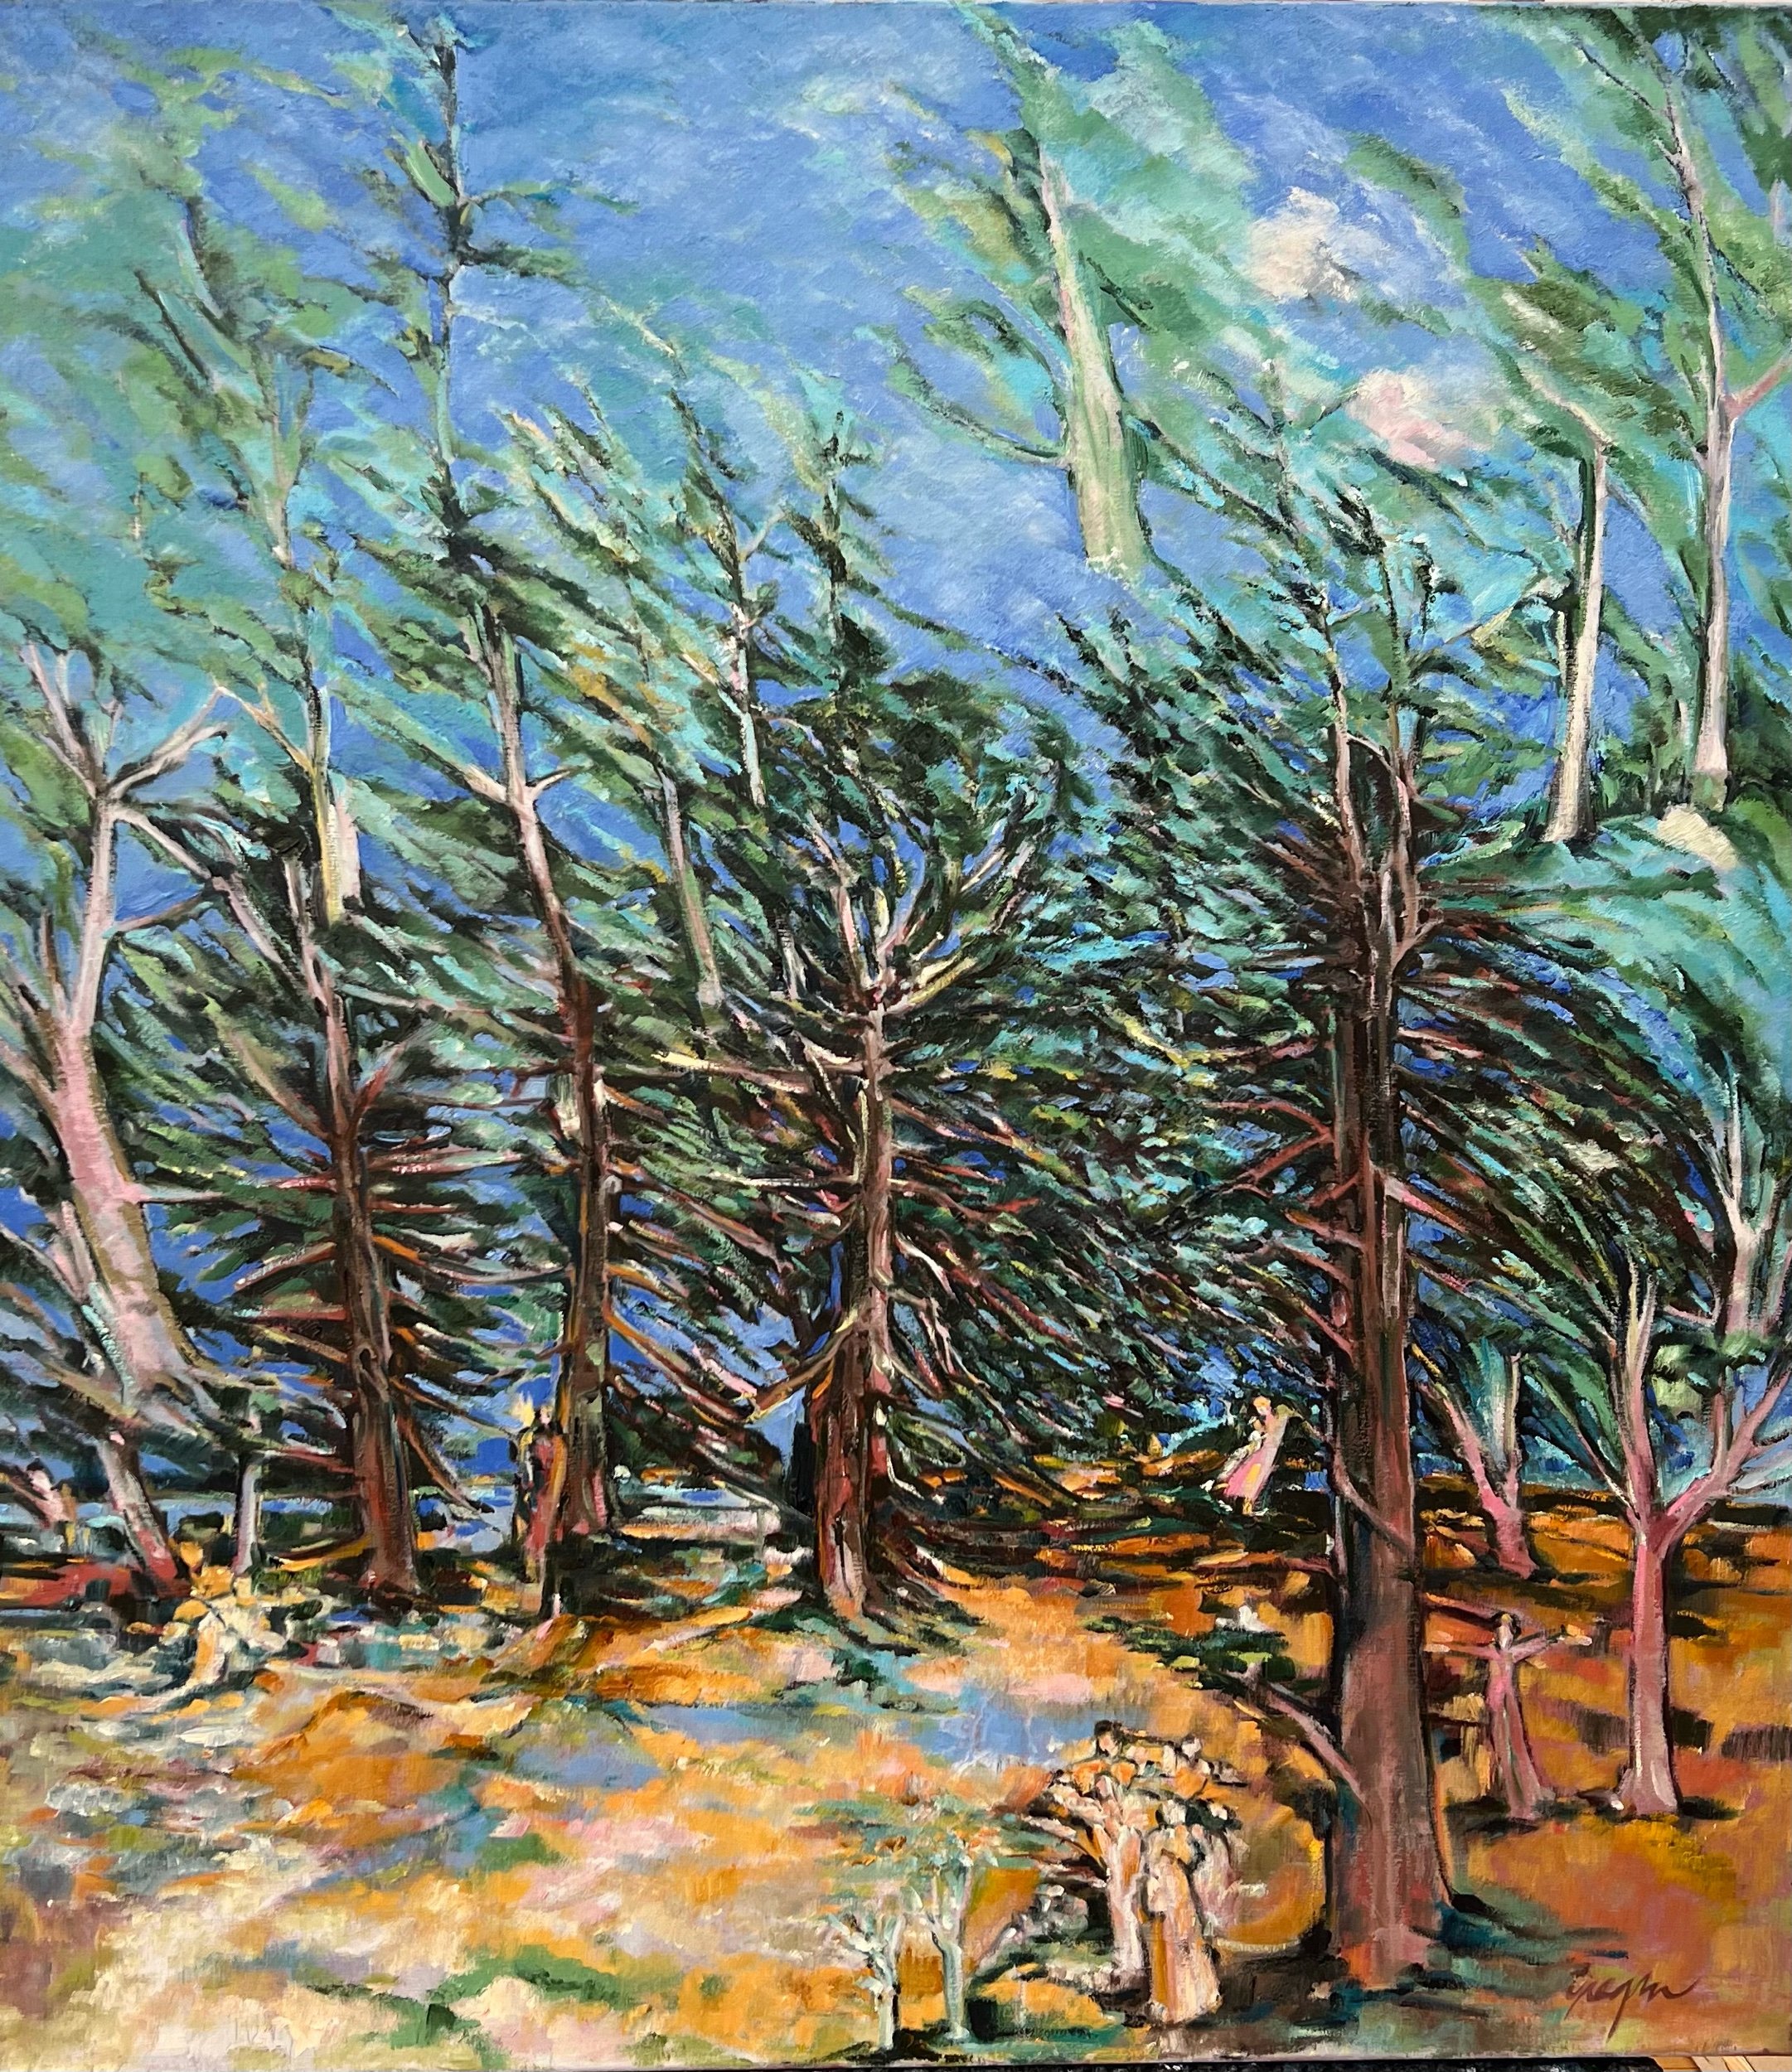 Figures in a Blue Hemlock Forest